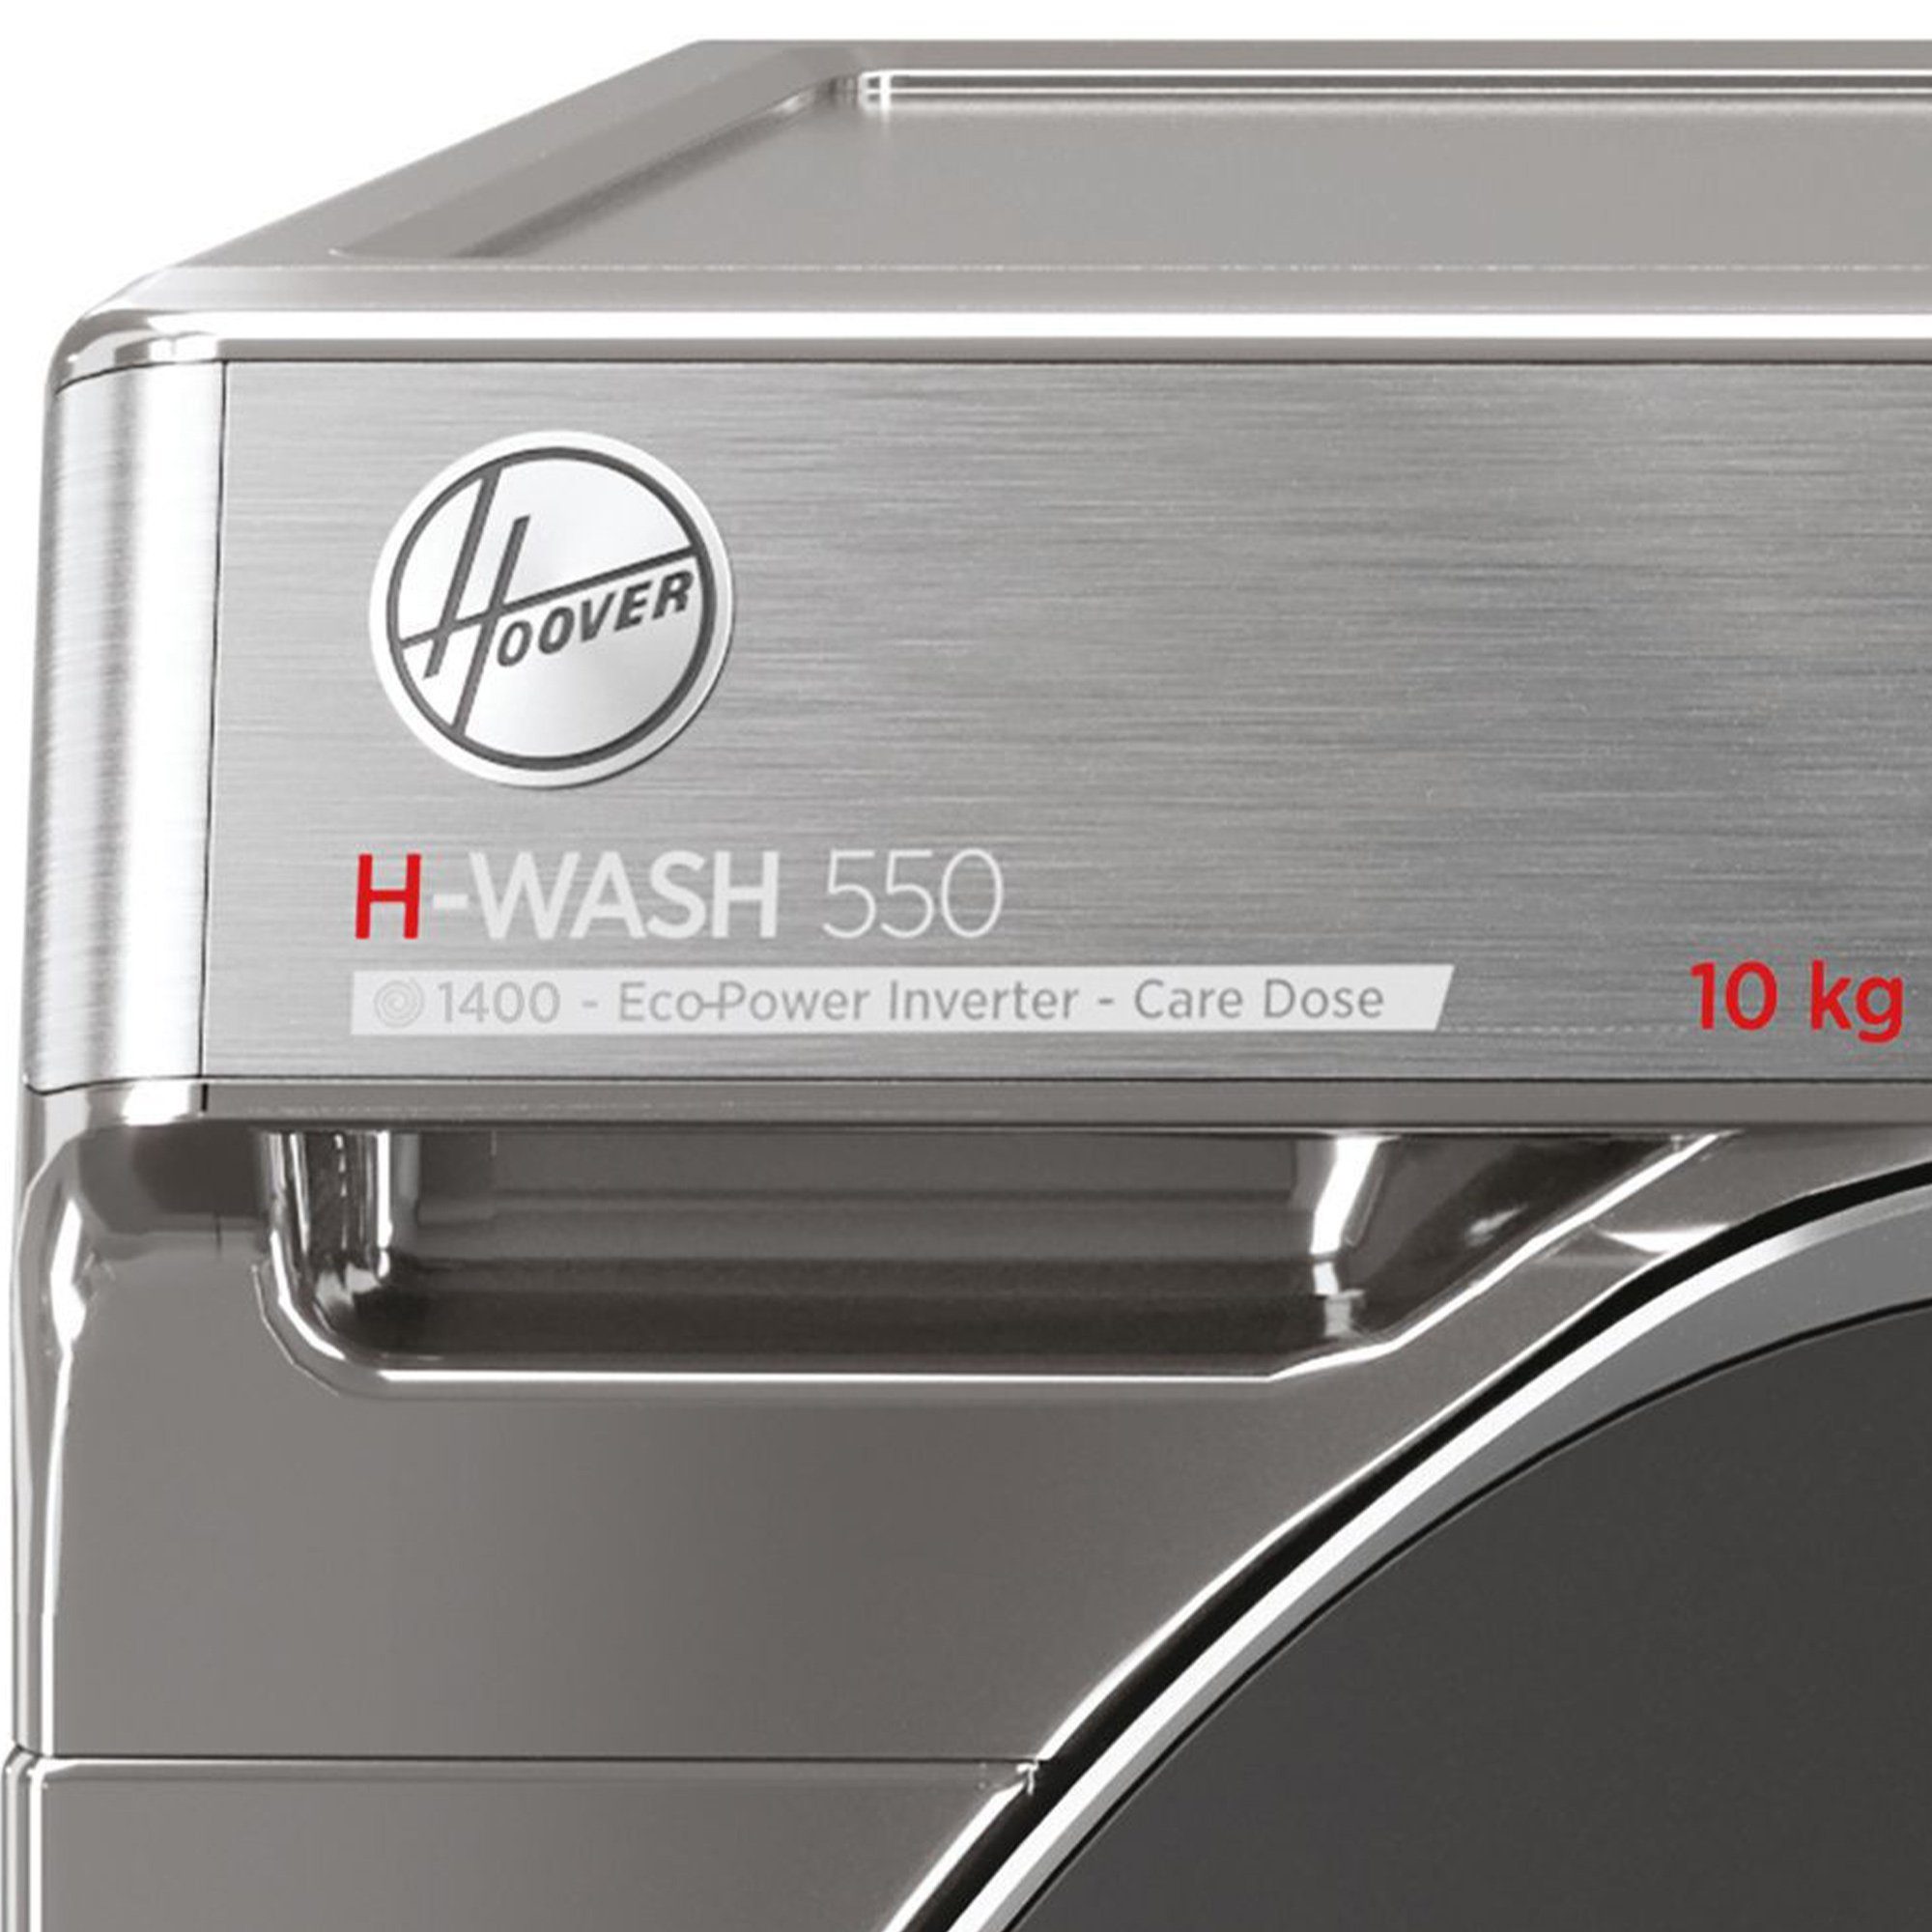 Hoover Waschmaschine H-WASH 550 Expert 10 H5WPBD410AMBCR/S, Power Care, ActiveSteam, 1400 Mengenautomatik App U/min, hOn Bluetooth, kg, / Design + Wi-Fi